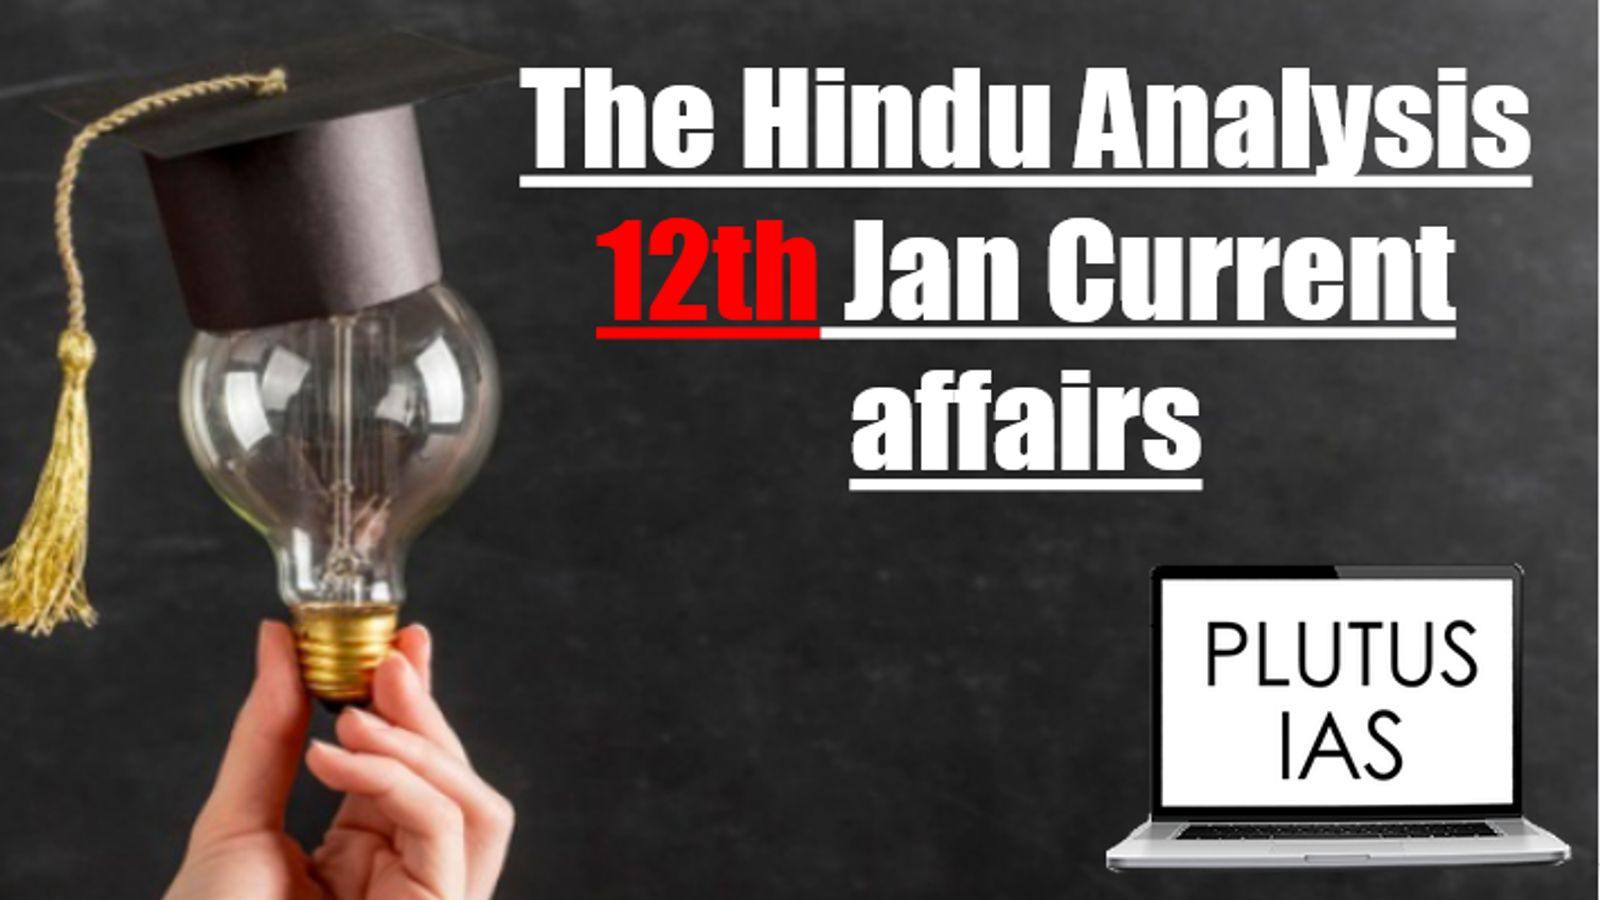 The Hindu Analysis 12th December